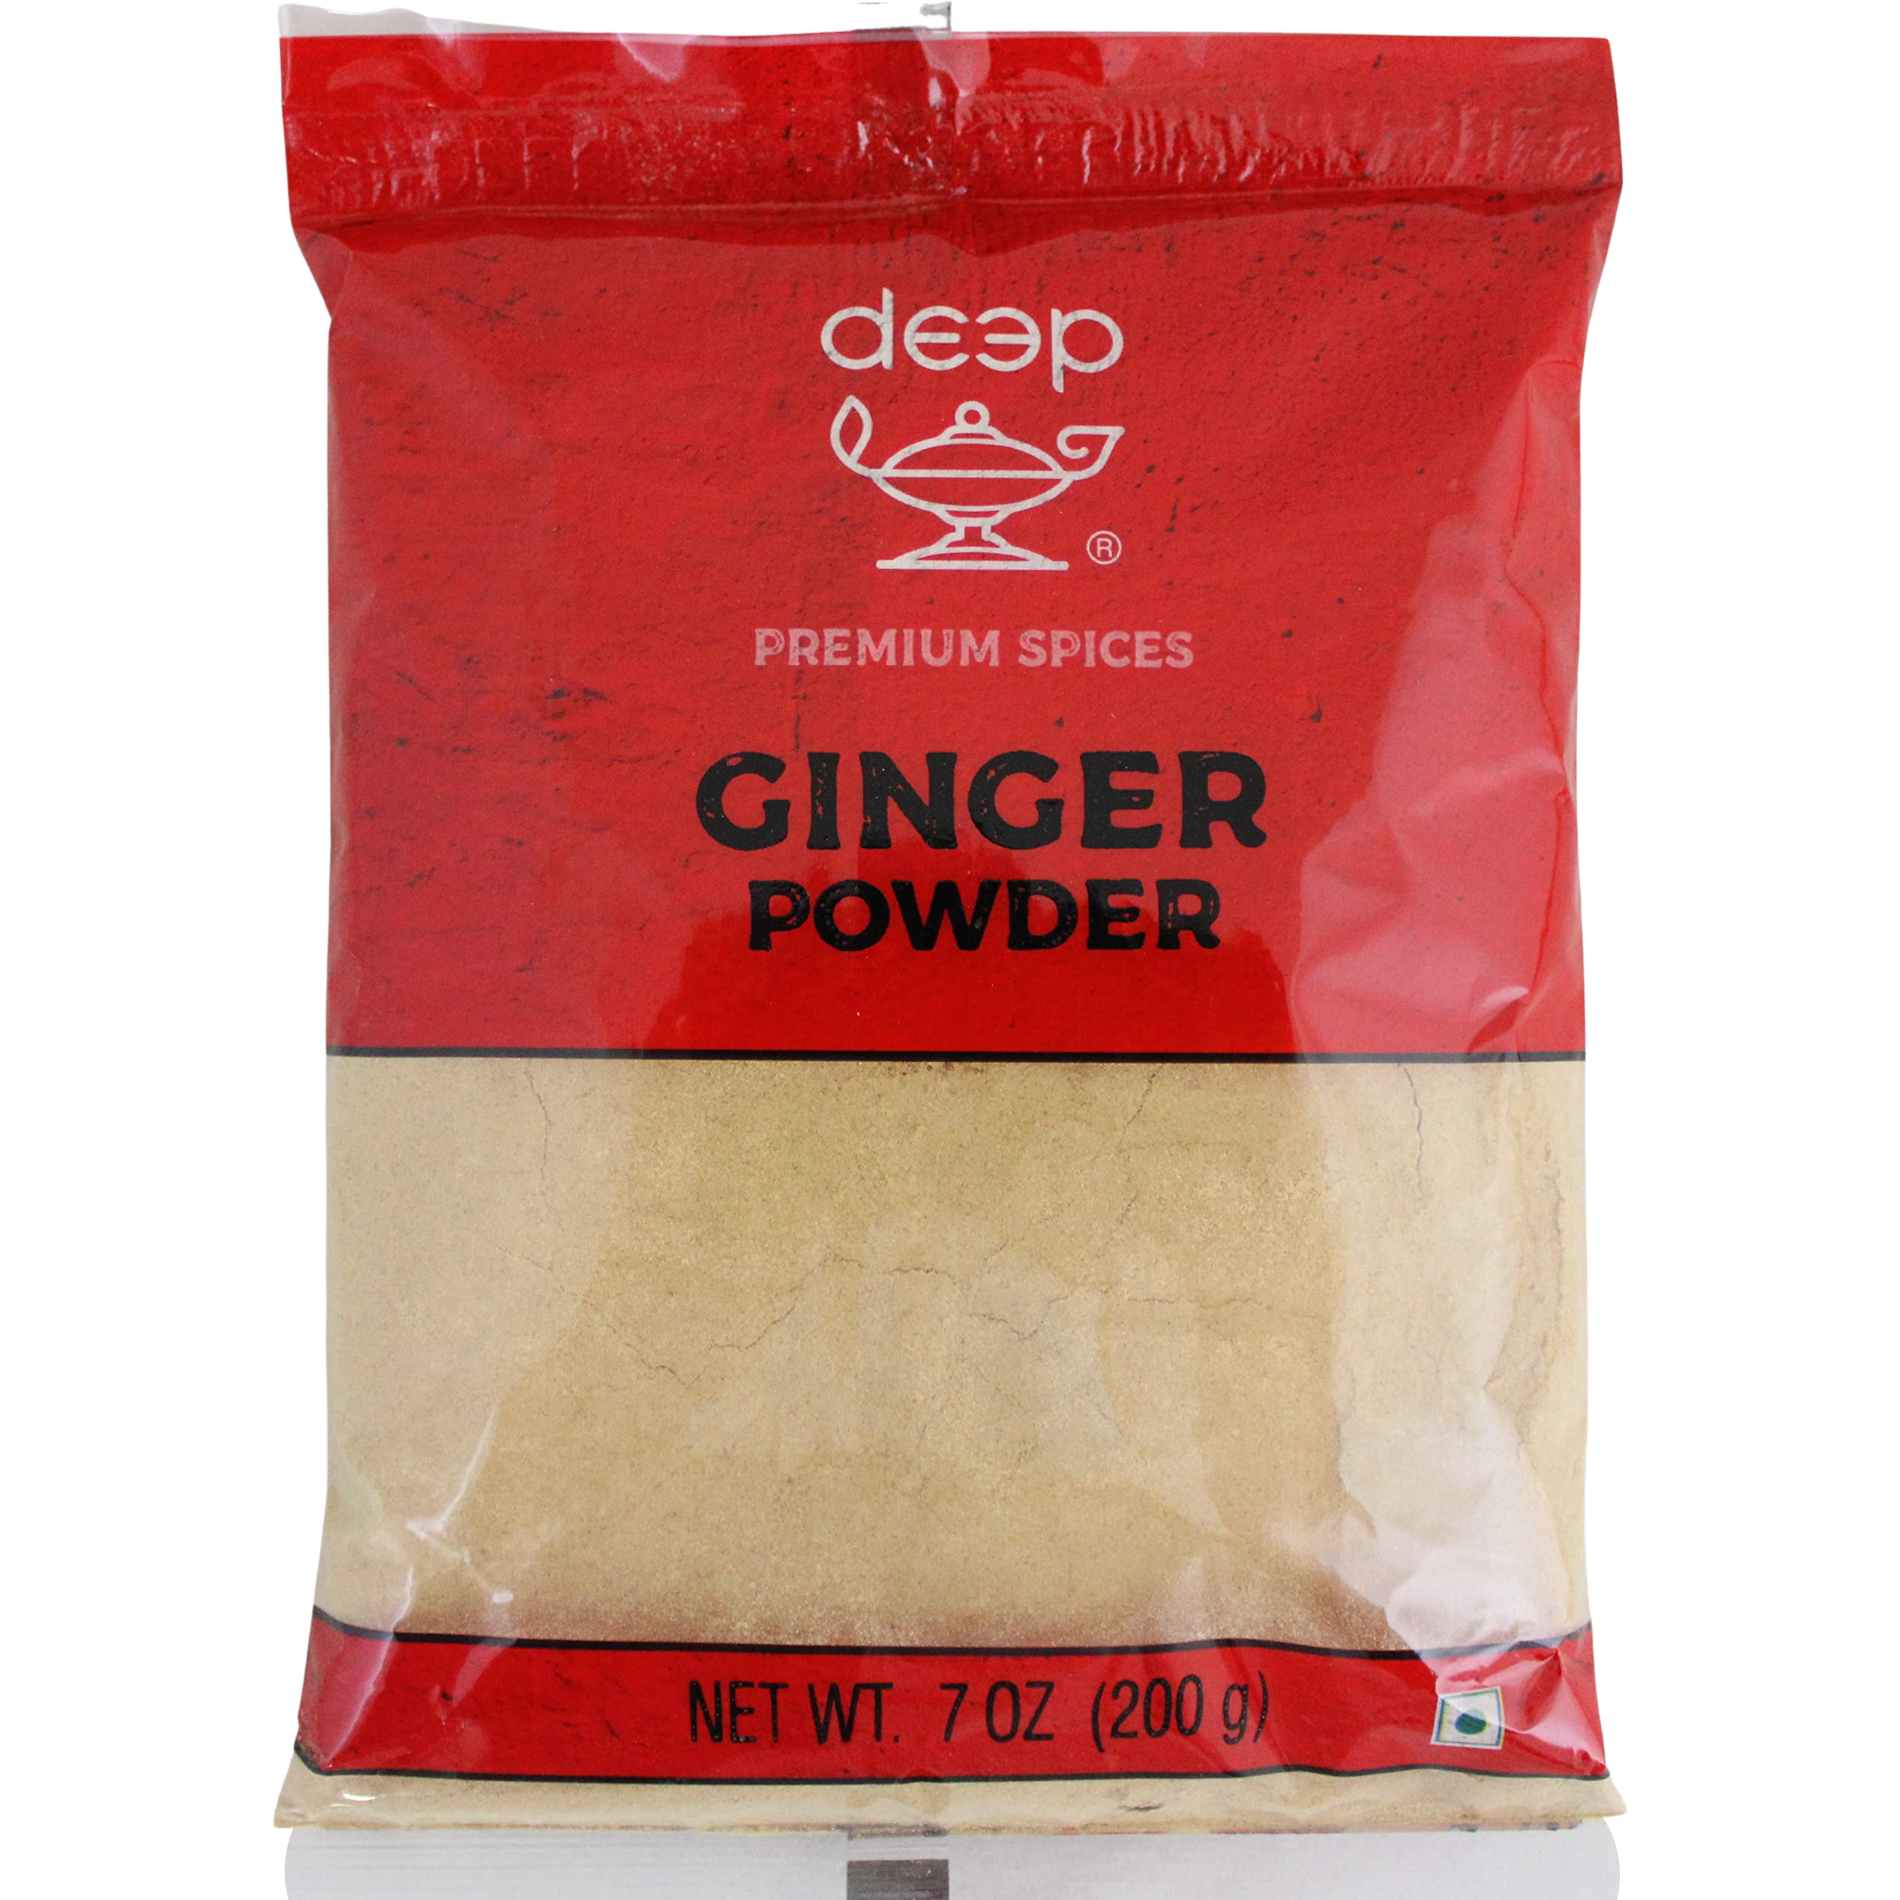 Pack of 5 - Deep Ginger Powder - 200 Gm (7 Oz)